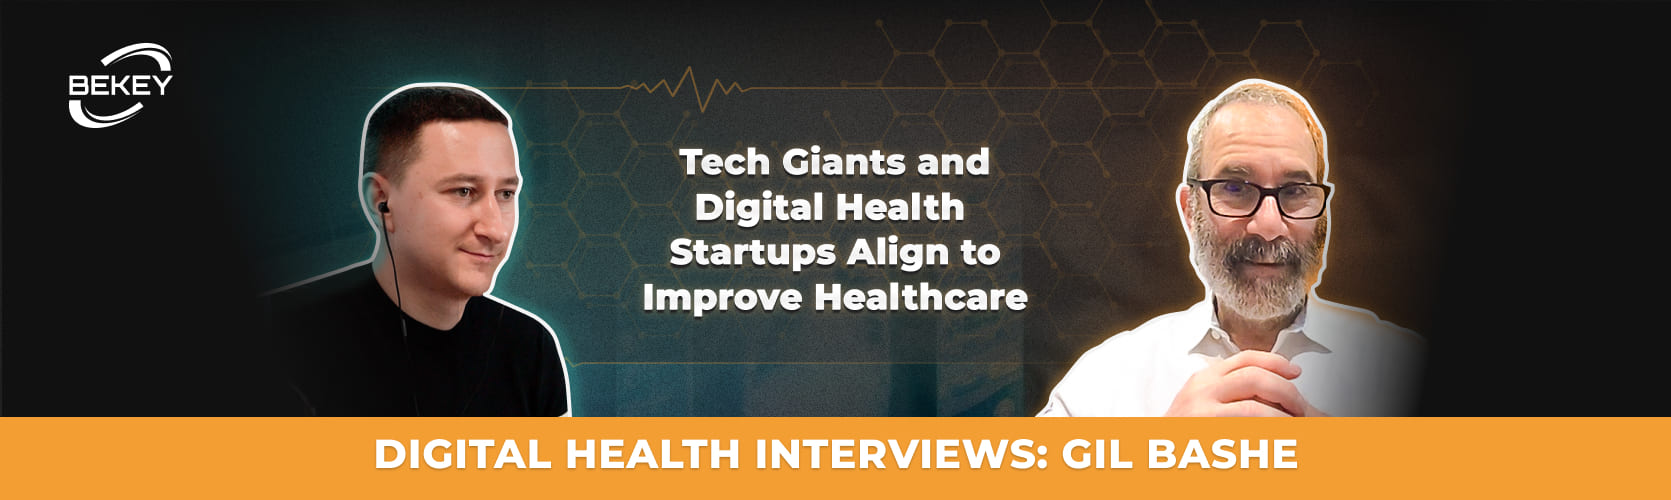 Gil Bashe - digital health interviews